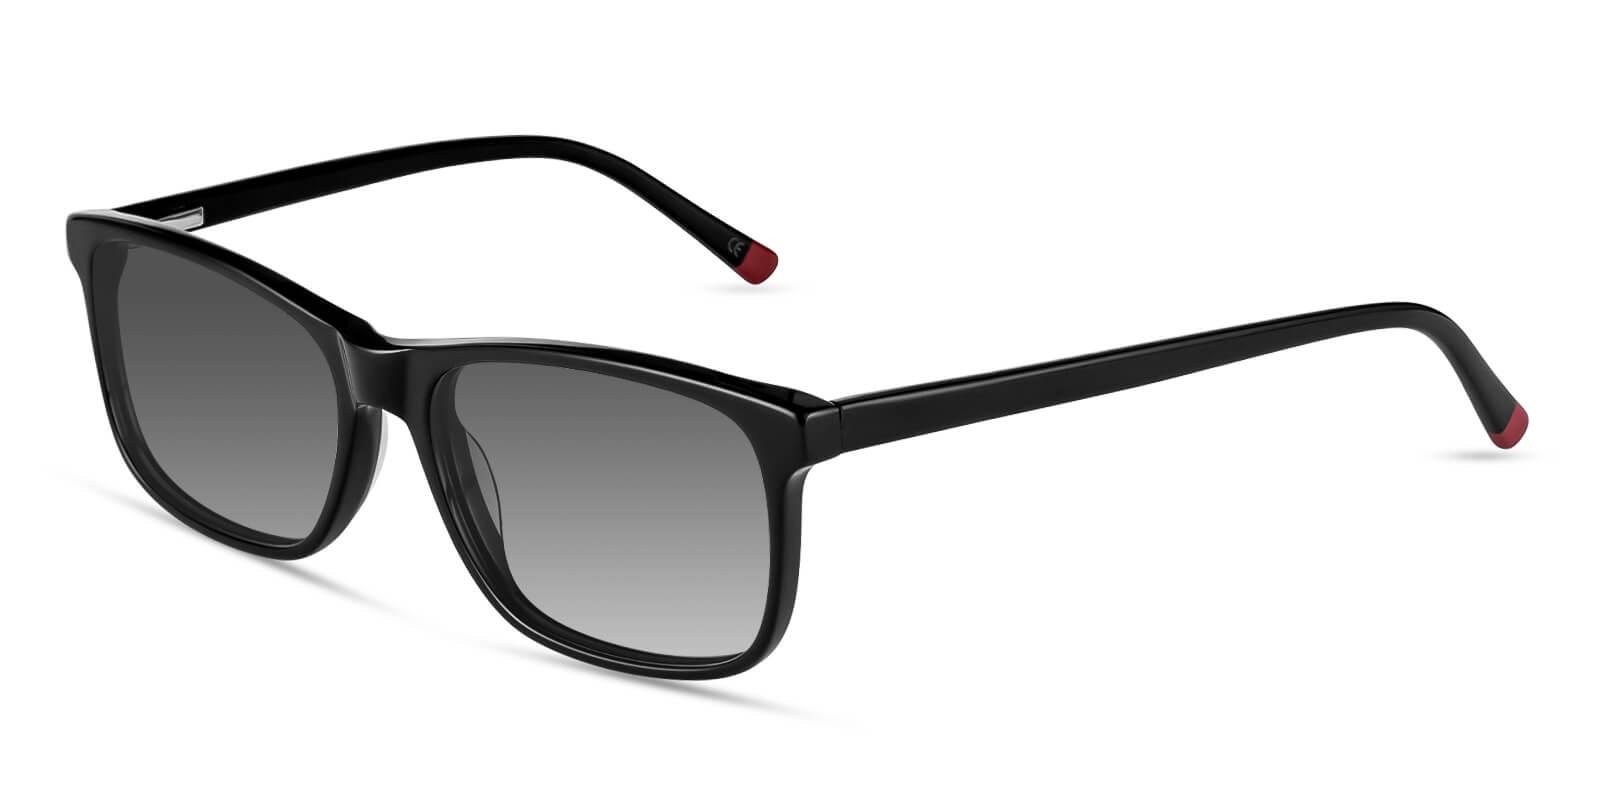 Candela Pattern Acetate SpringHinges , Sunglasses , UniversalBridgeFit Frames from ABBE Glasses